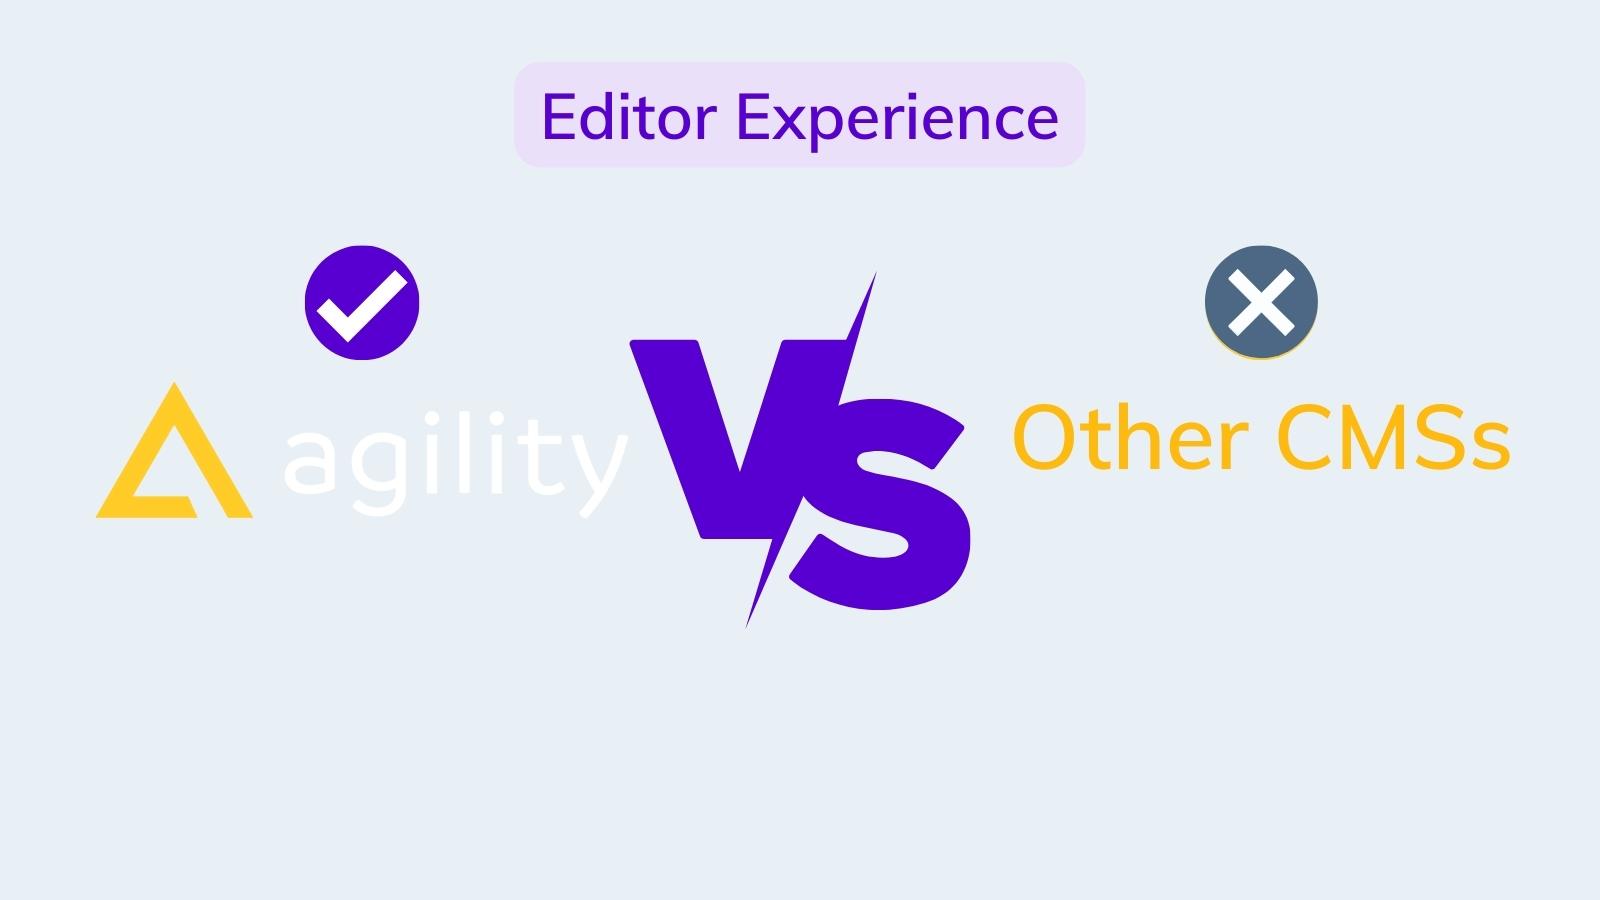 Agility editor experience vs other CMSs on agilitycms.com